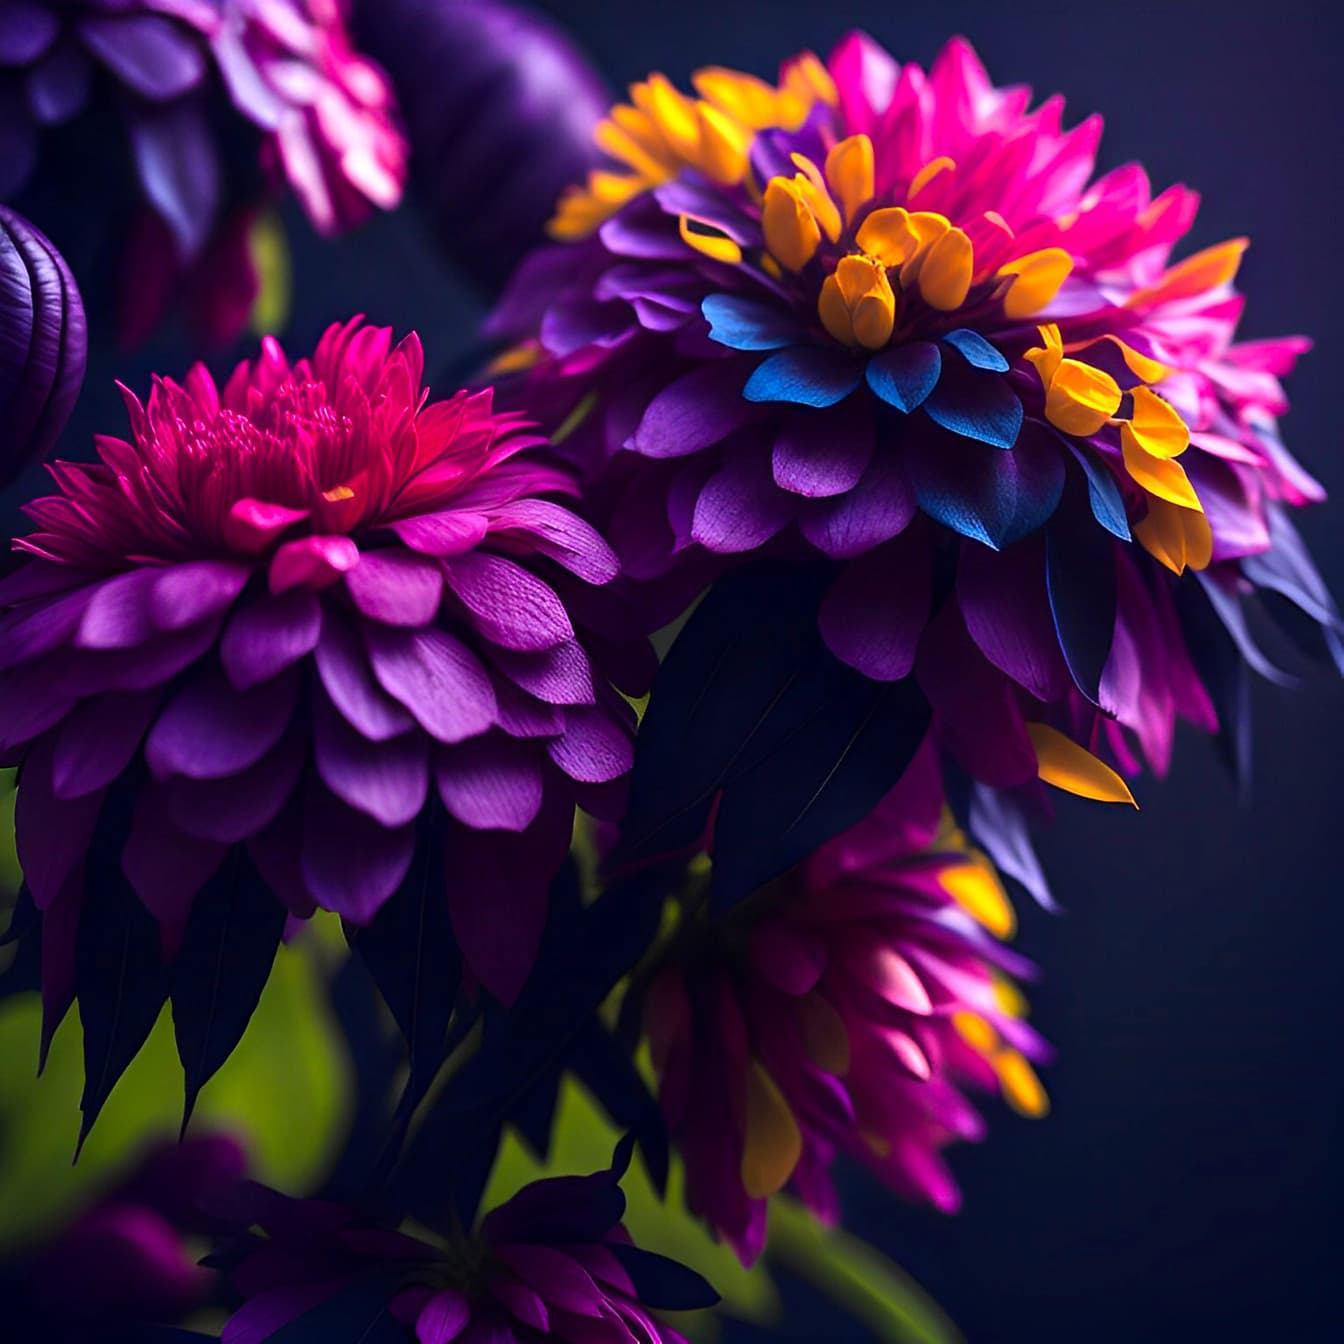 warna-warni, bunga, keunguan, biru gelap, karya seni, ilustrasi, bunga, merah muda